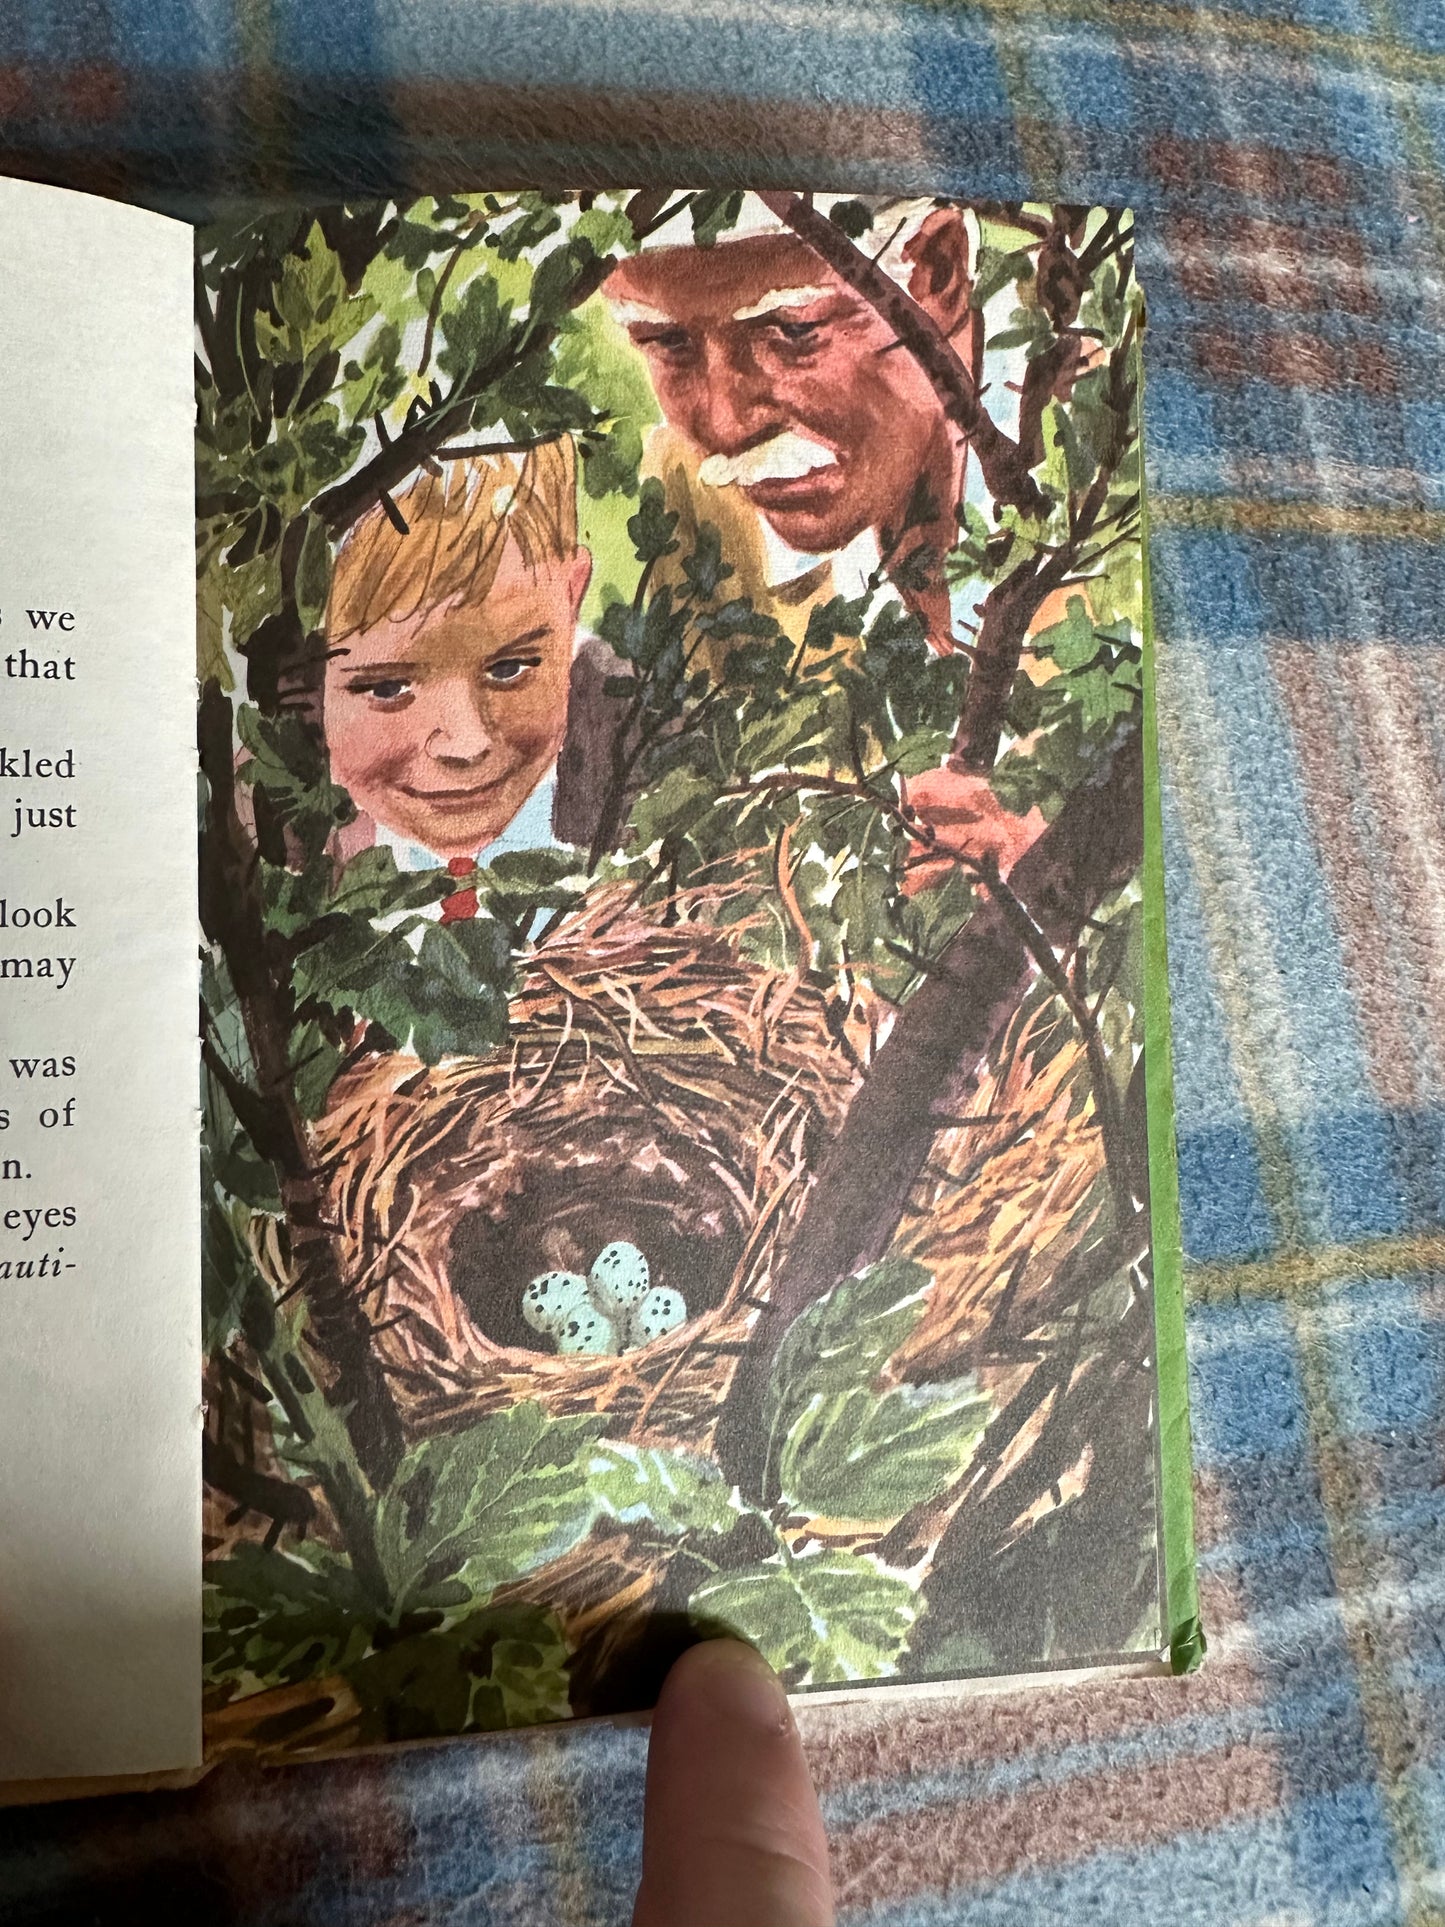 1962 Uncle Ben’s Woodland Friends(Jack & Jill Book 9)Fleetway